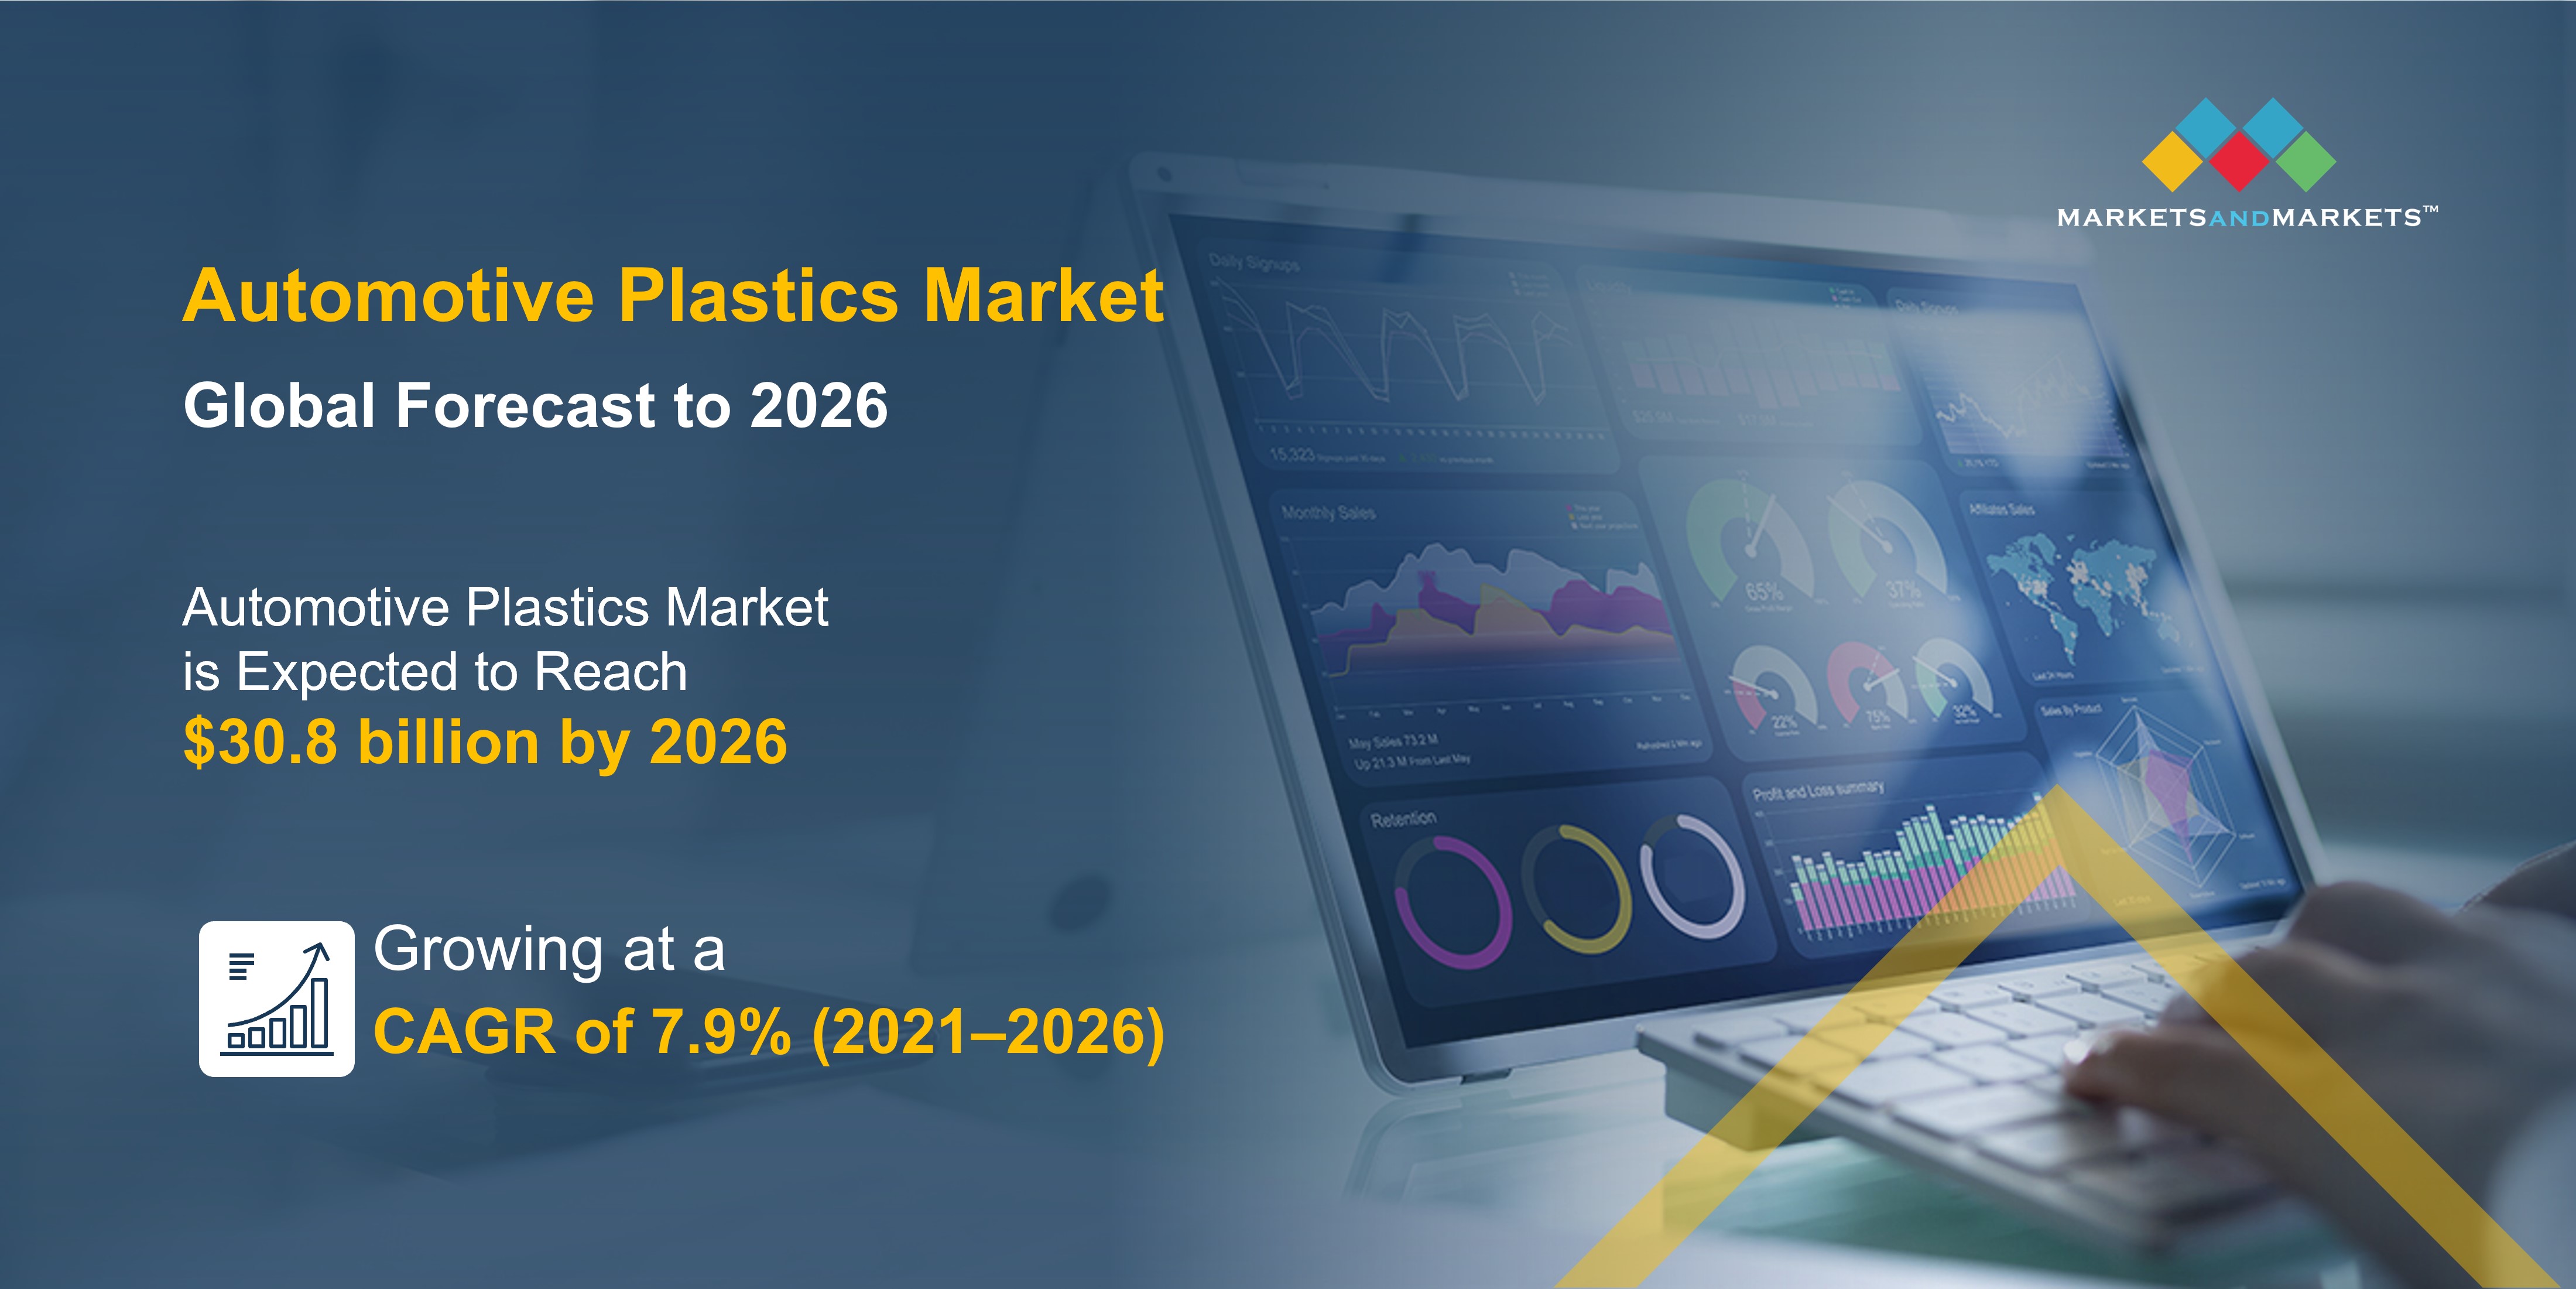 Automotive Plastics Market will Account for Around US$ 30.8 billion in Revenues by 2026| Report by MarketsandMarkets™